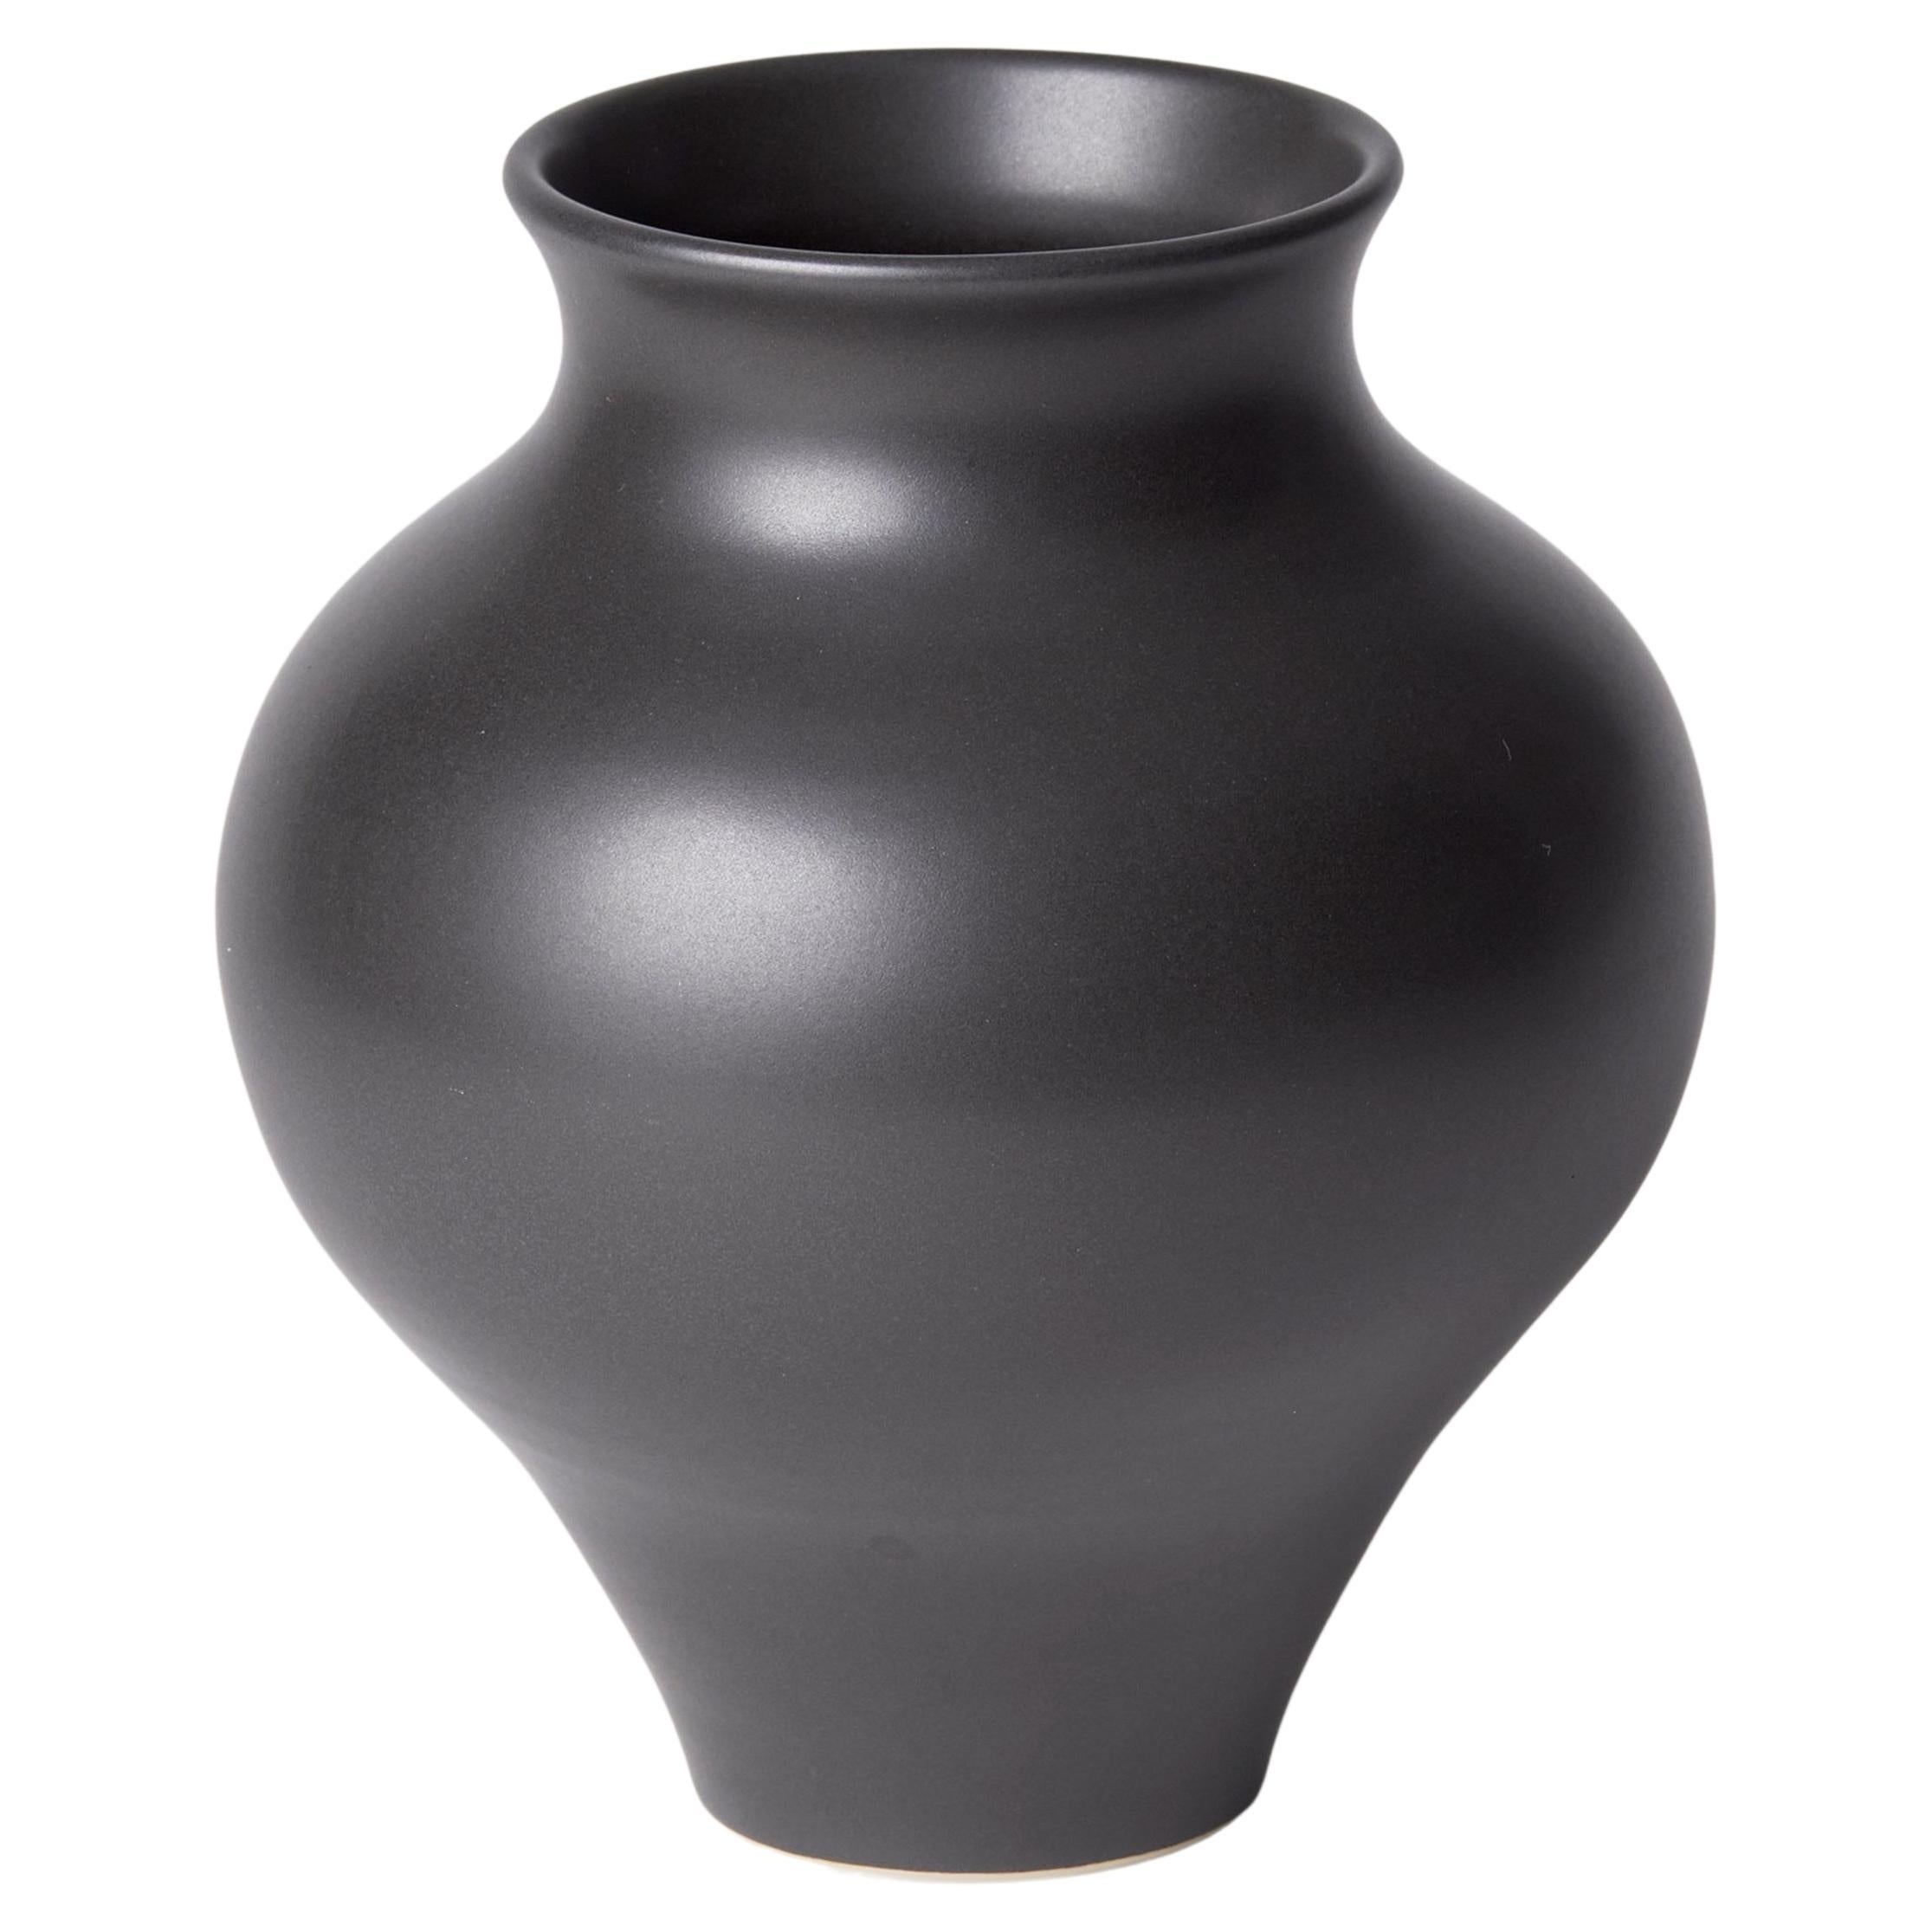 Balluster Vase, a unique black / ebony porcelain vase by Vivienne Foley